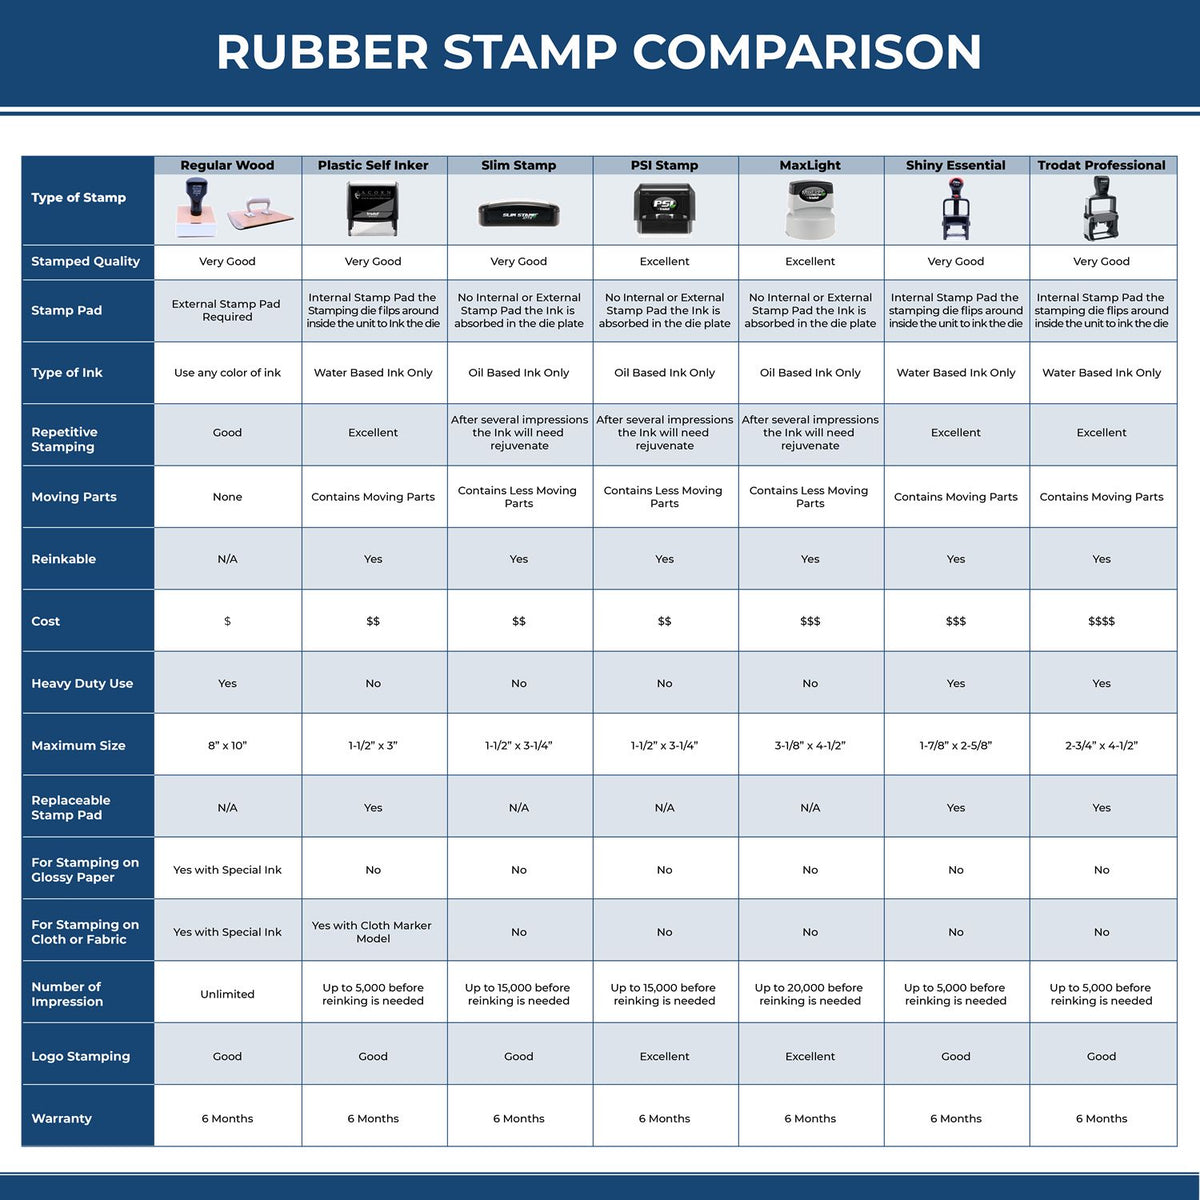 Printed Matter Rubber Stamp 4186R Rubber Stamp Comparison